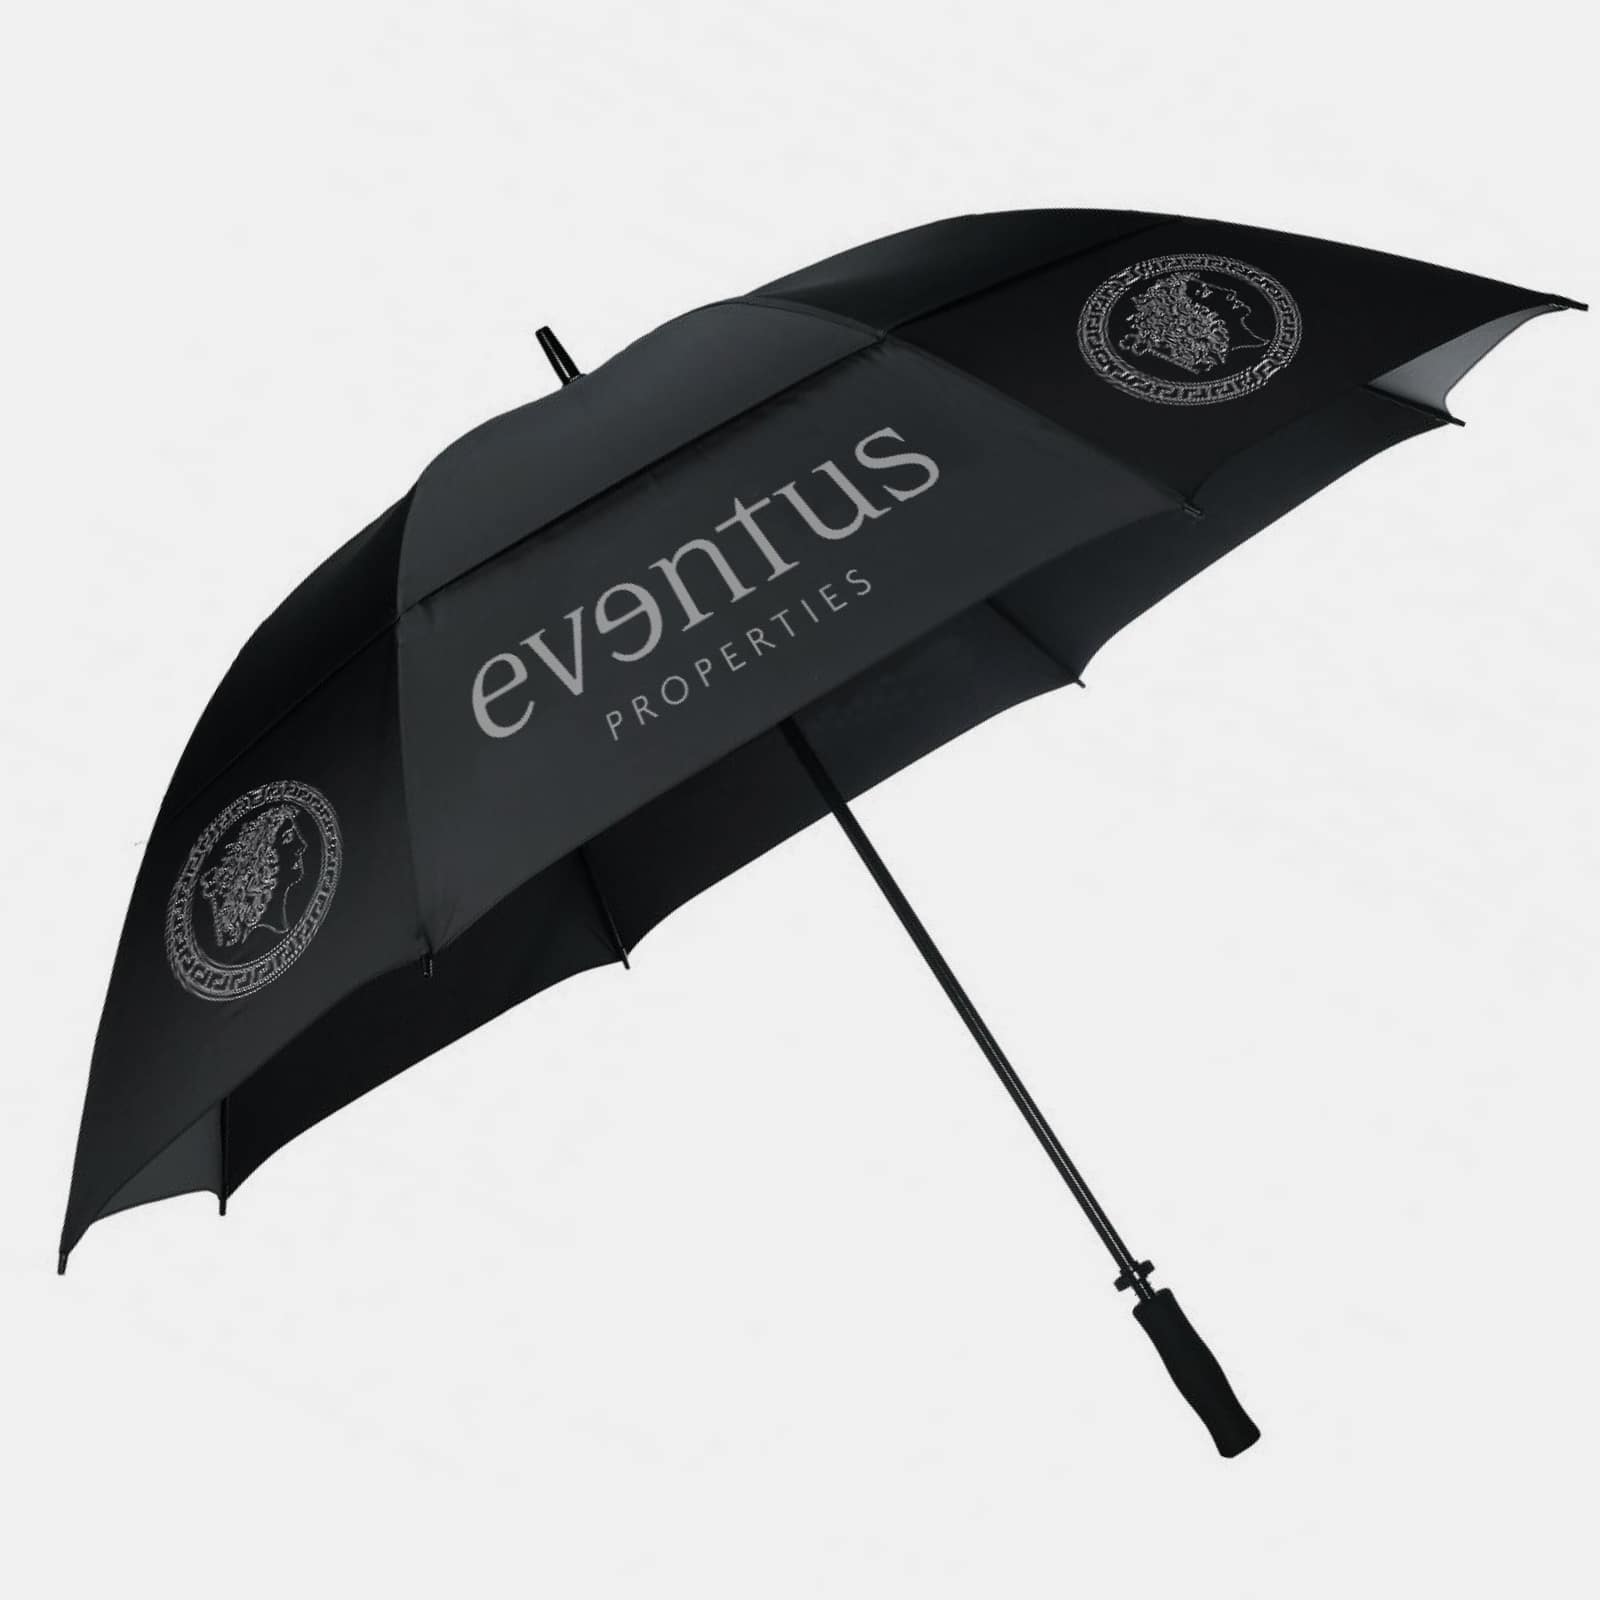 Eventus Properties Umbrella